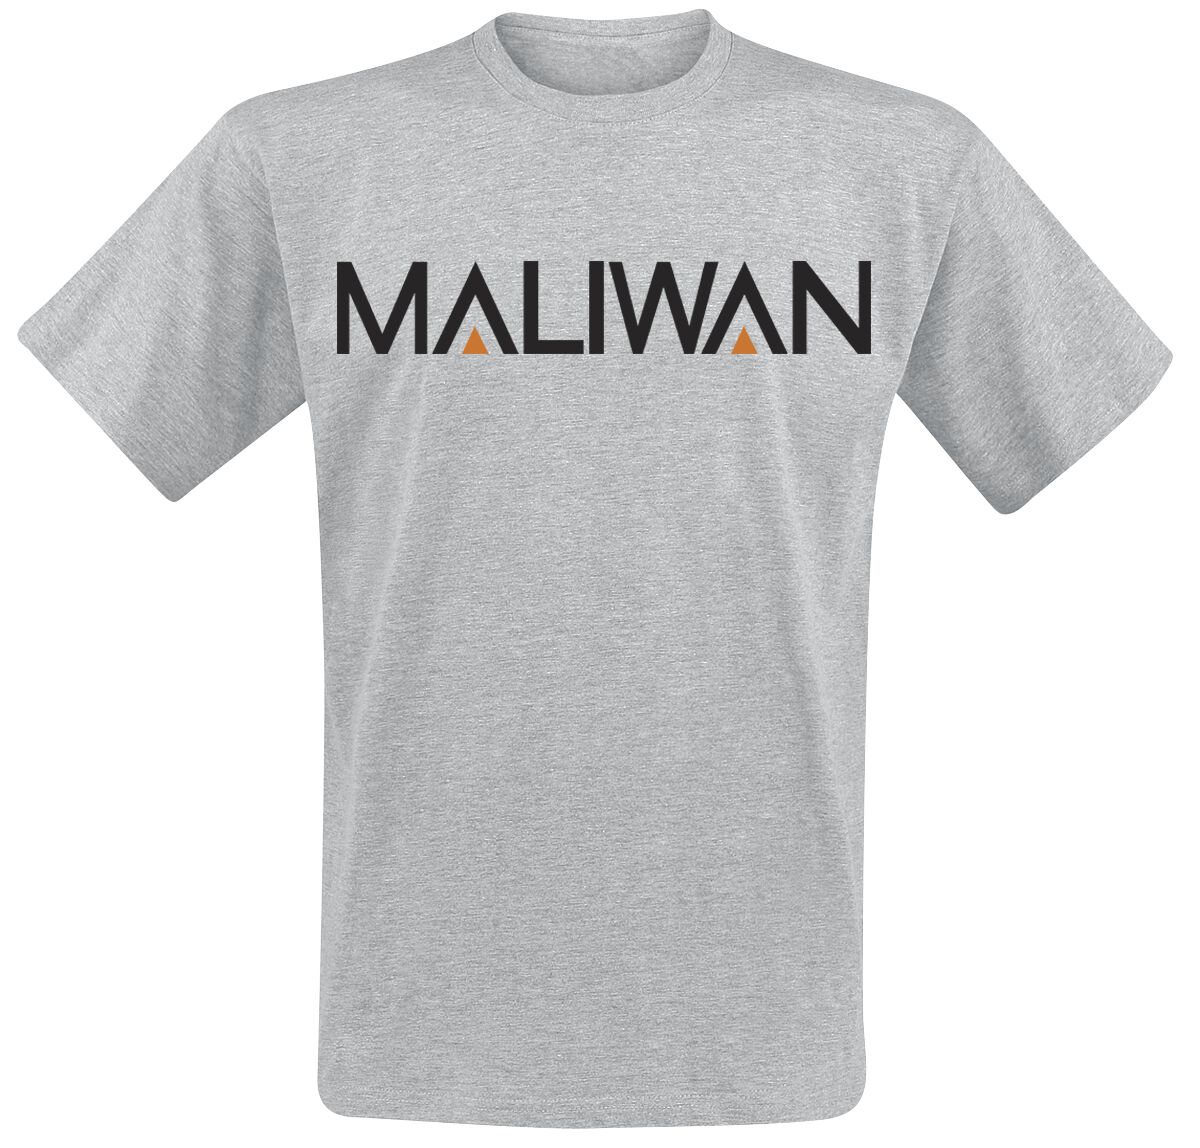 Borderlands 3 - Maliwan T-Shirt grau meliert in L